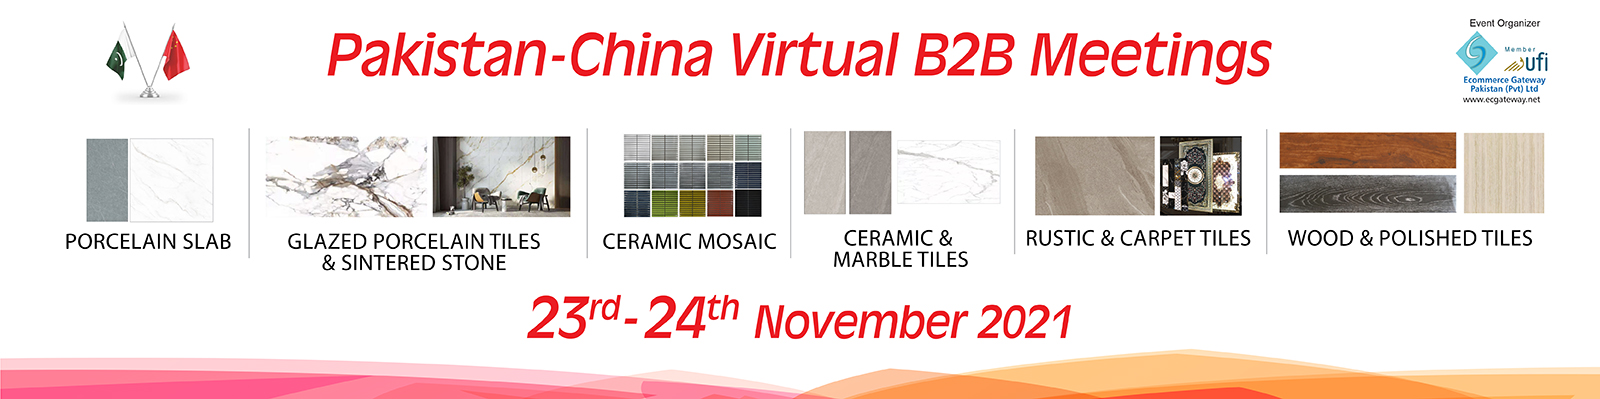 Pak-China Virtual B2B Meetings